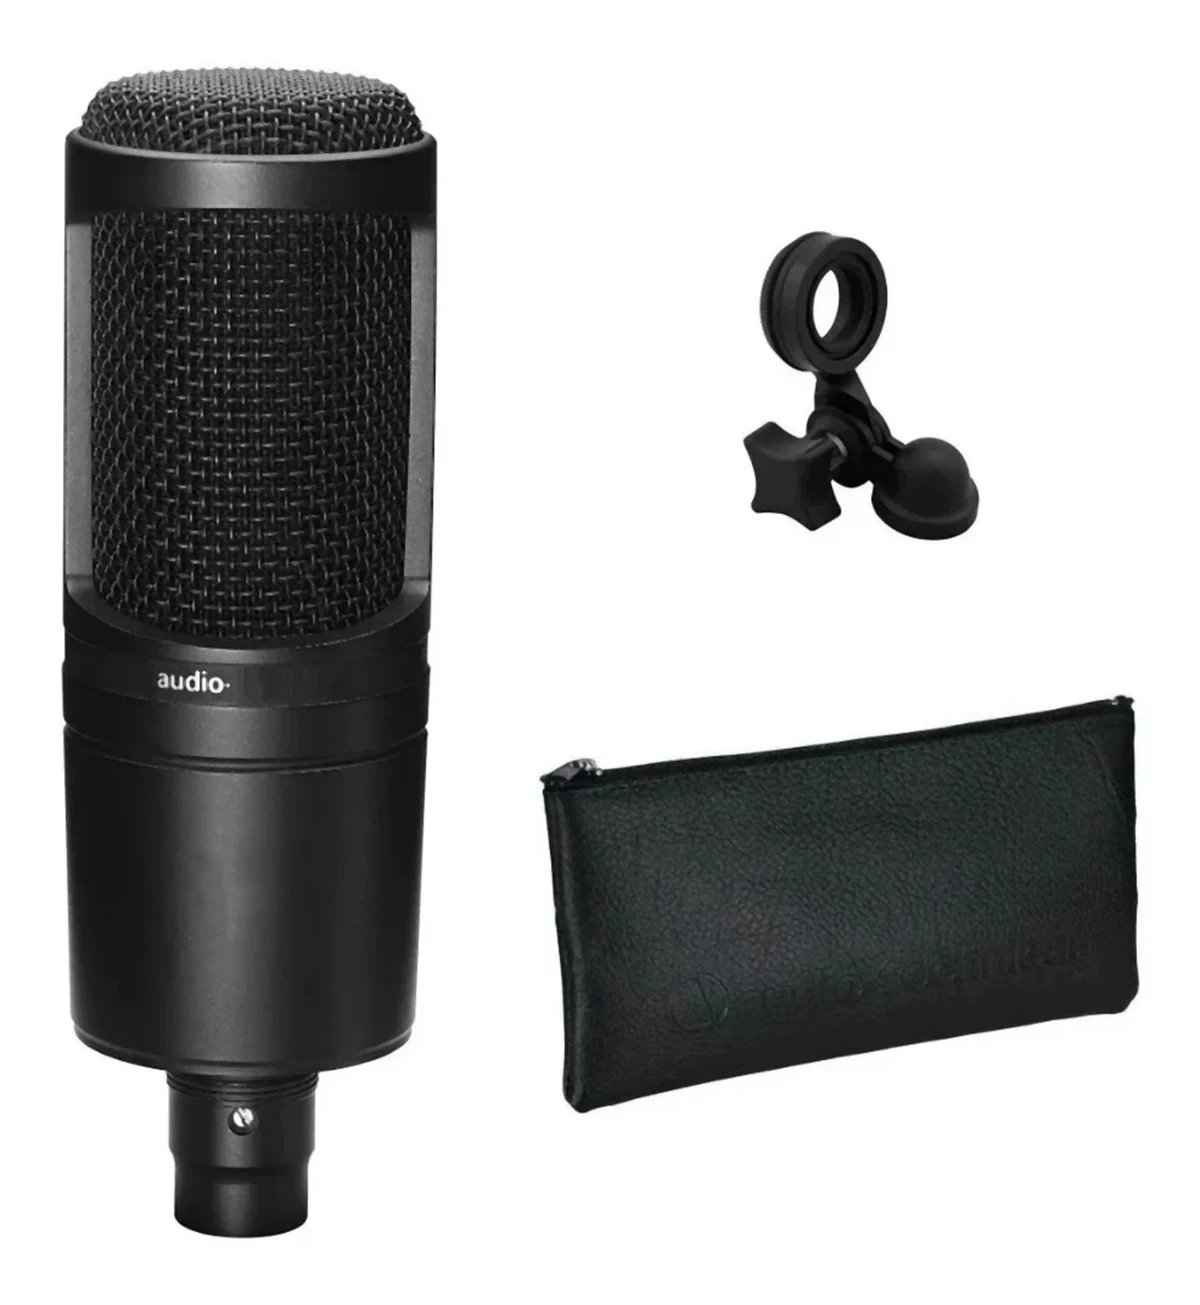 Avdio AT2020 Cardioid Kondenzatorski Mikrofon 20-20000Hz Tri Pin XLRM Moški Mikrofon za Snemanje Sidro Karaoke MIC - 0